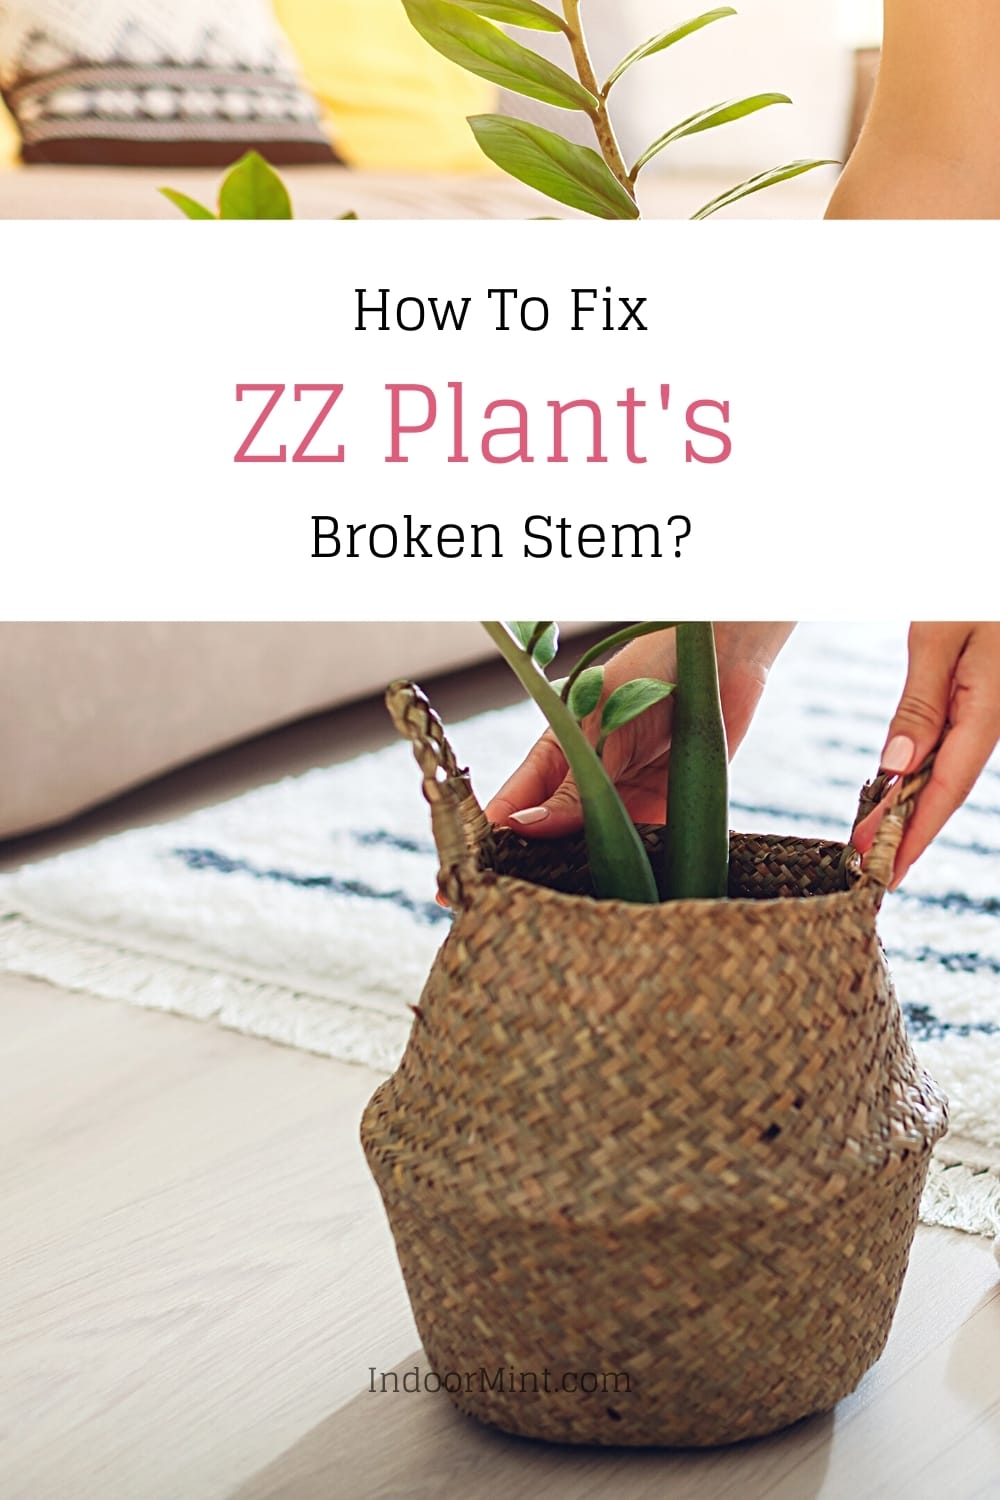 zz plant broken stem guide cover image